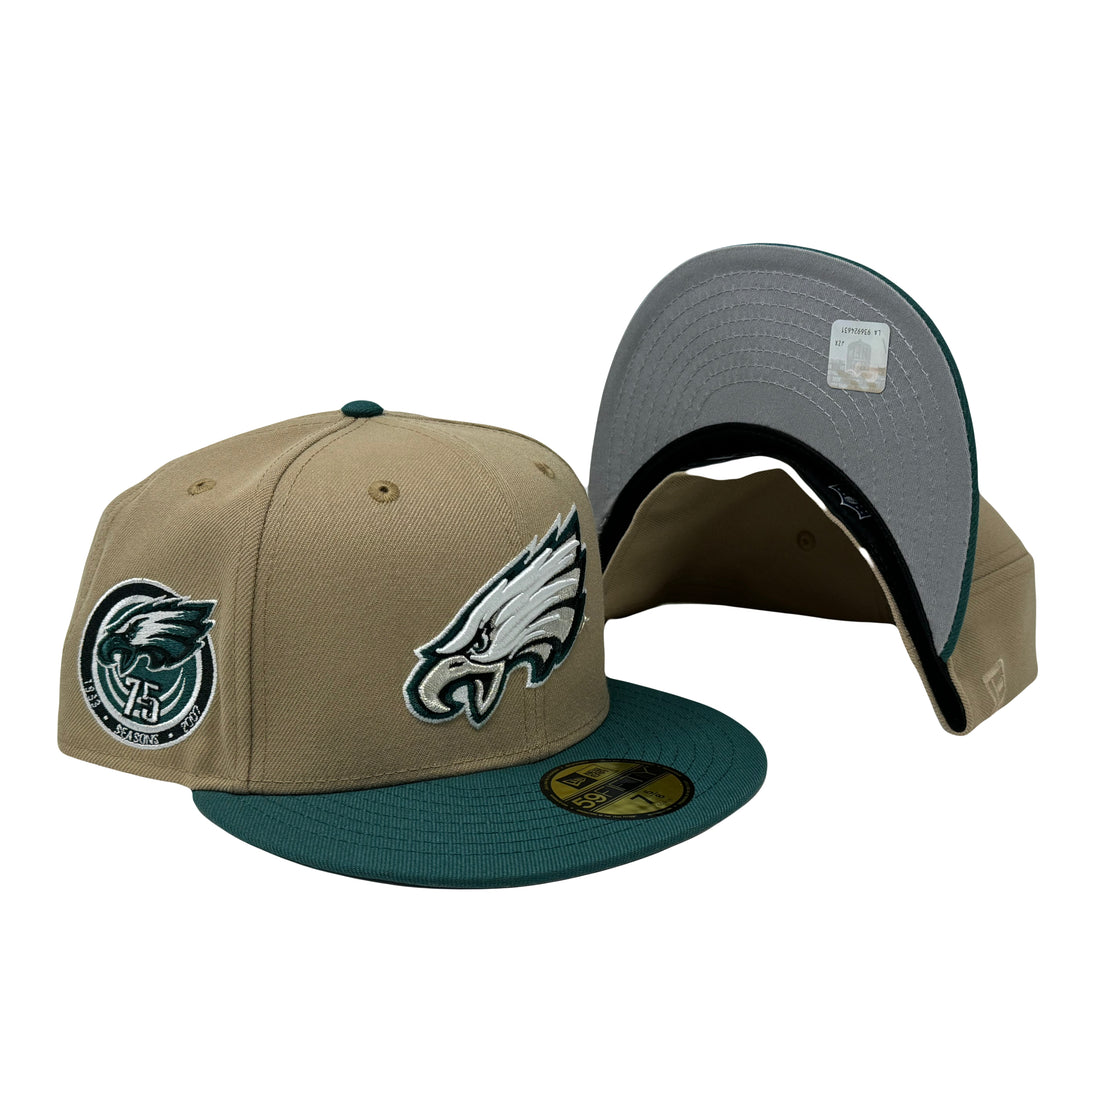 Philadelphia Eagle 75th Anniversary 5950 New Era Fitted Hat